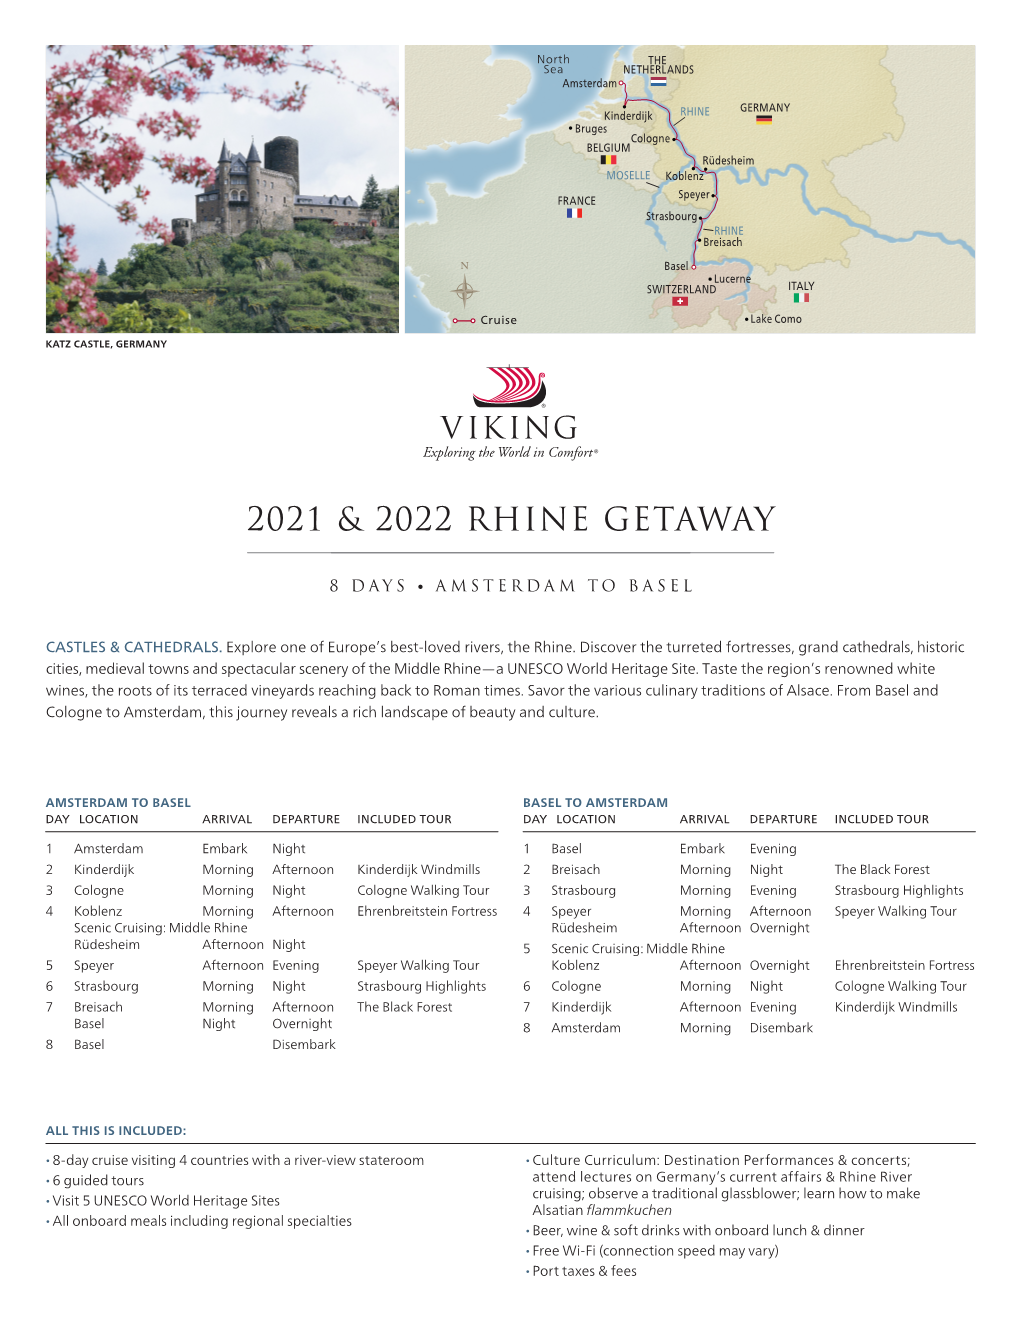 2021 & 2022 Rhine Getaway